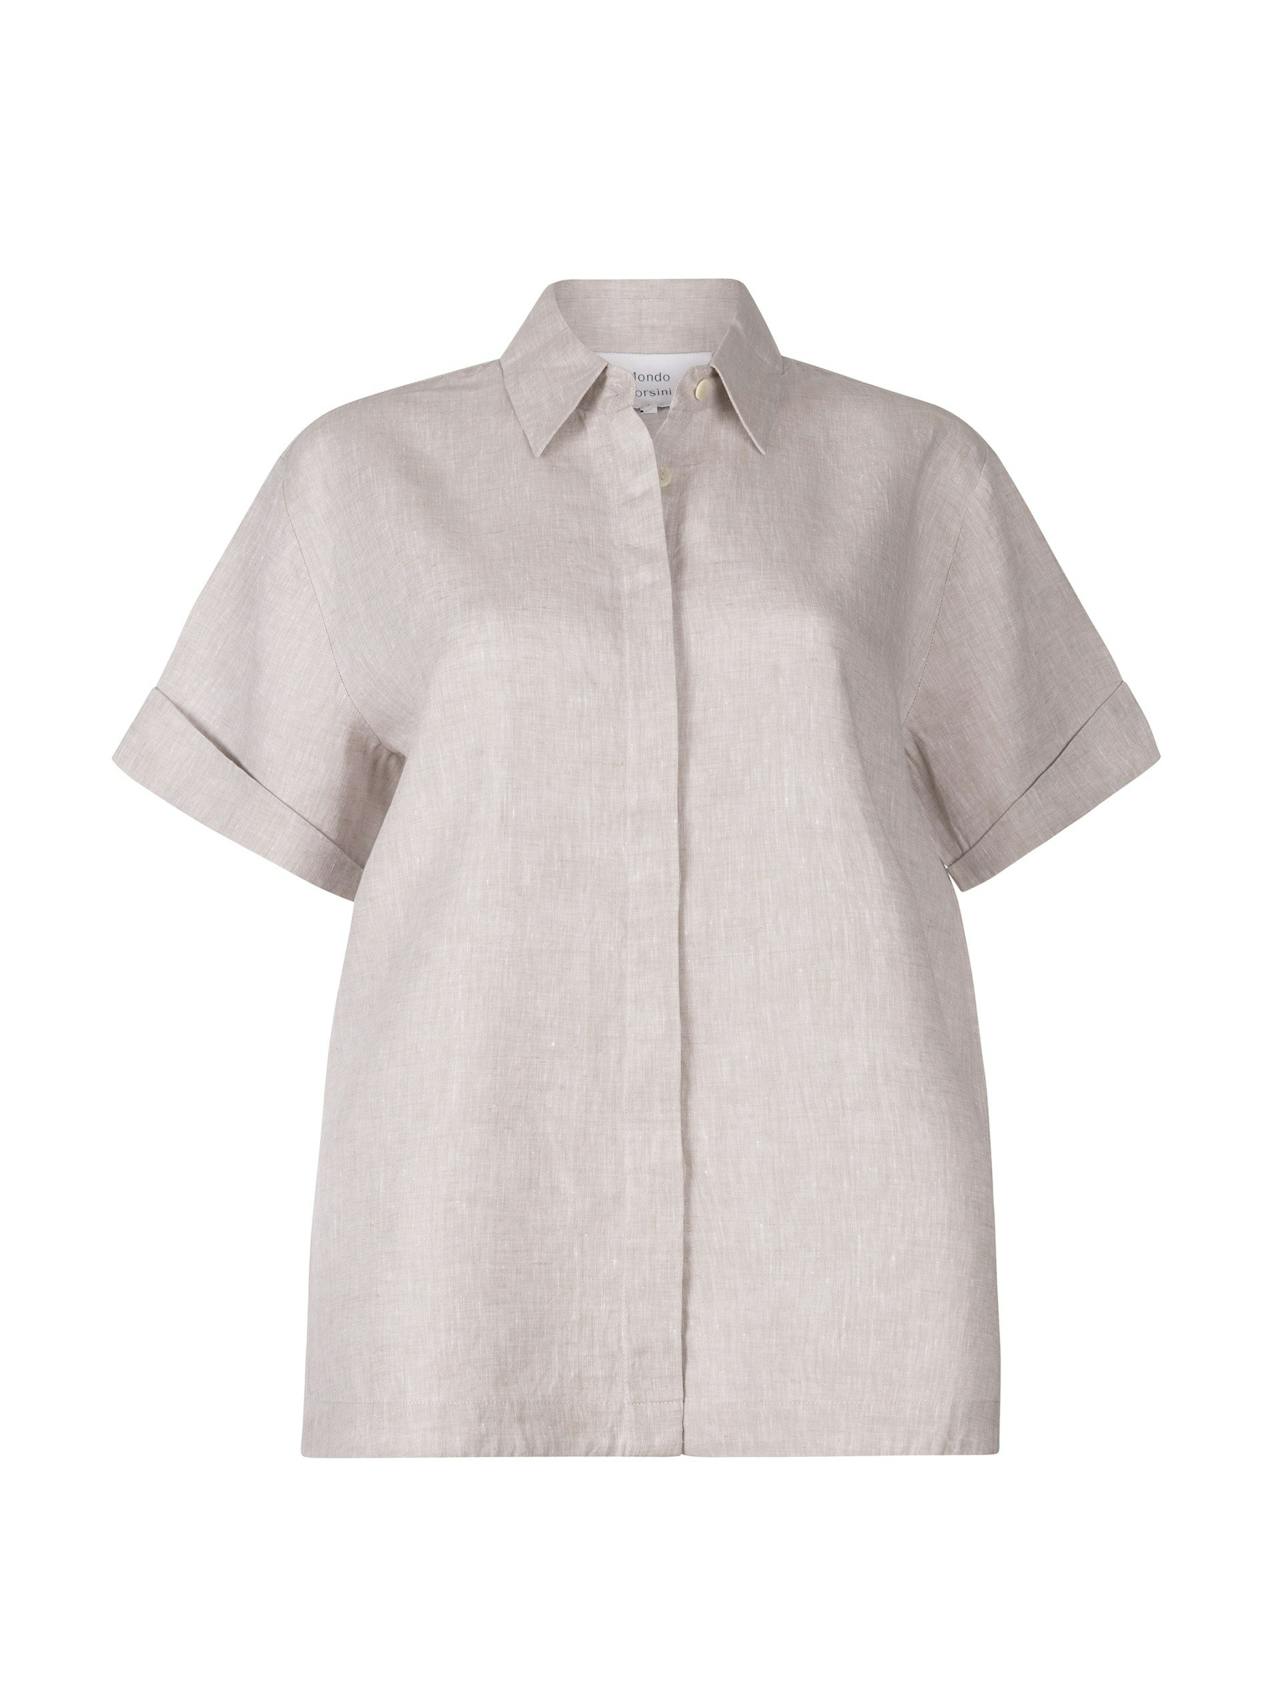 Bowler stone linen chambray shirt